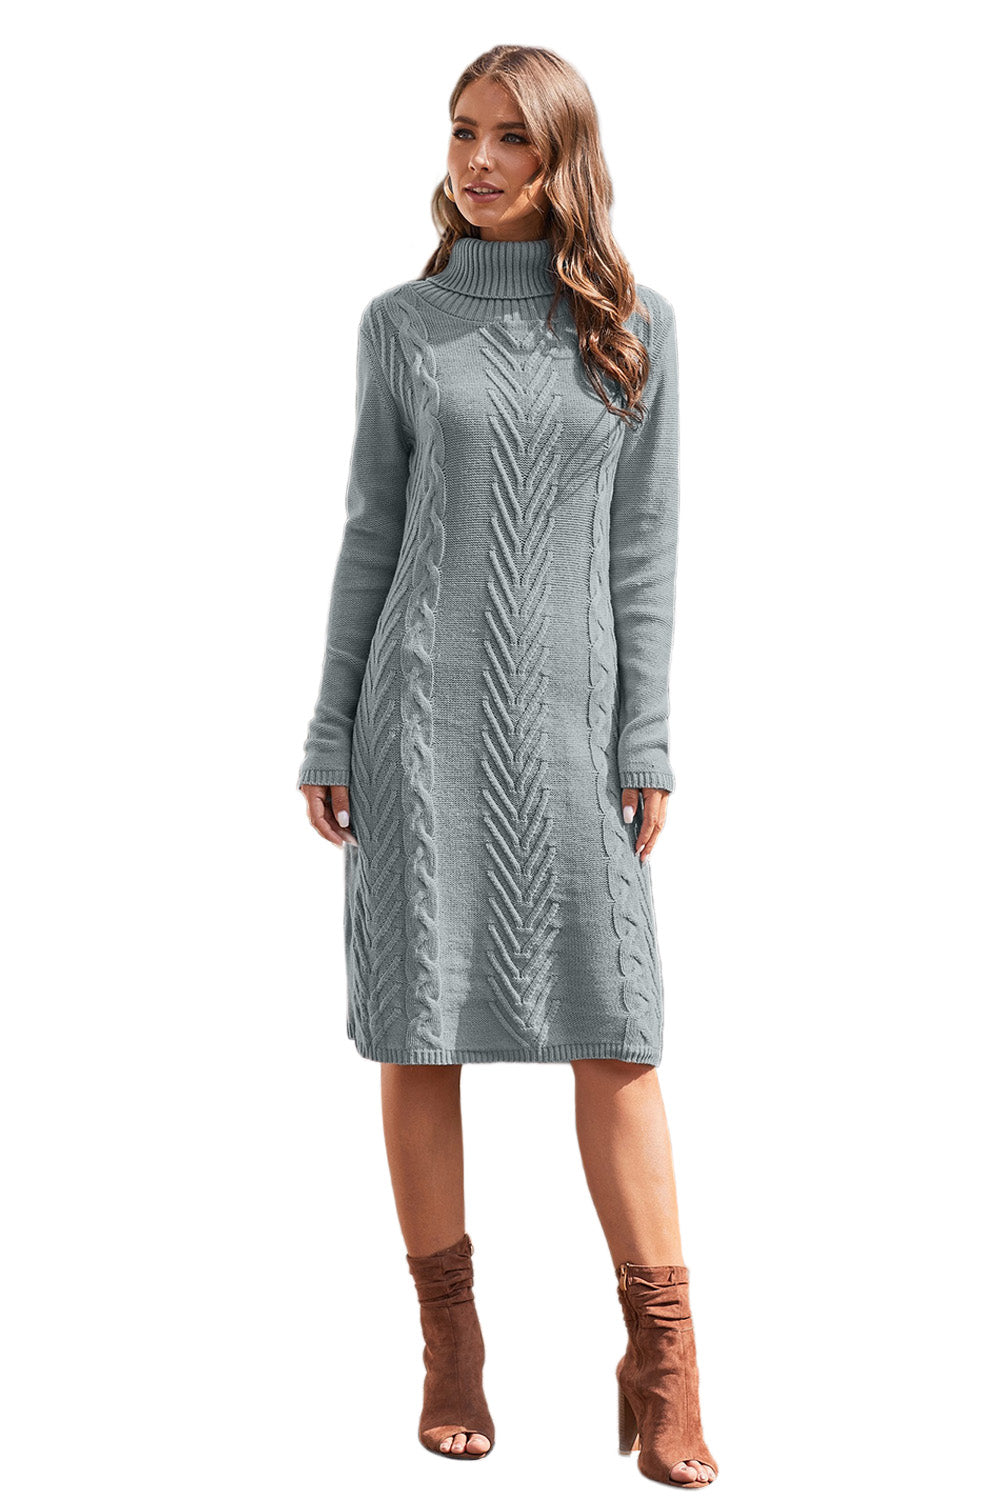 Winter Gray Hand Knitted High Neck Sweater Dress